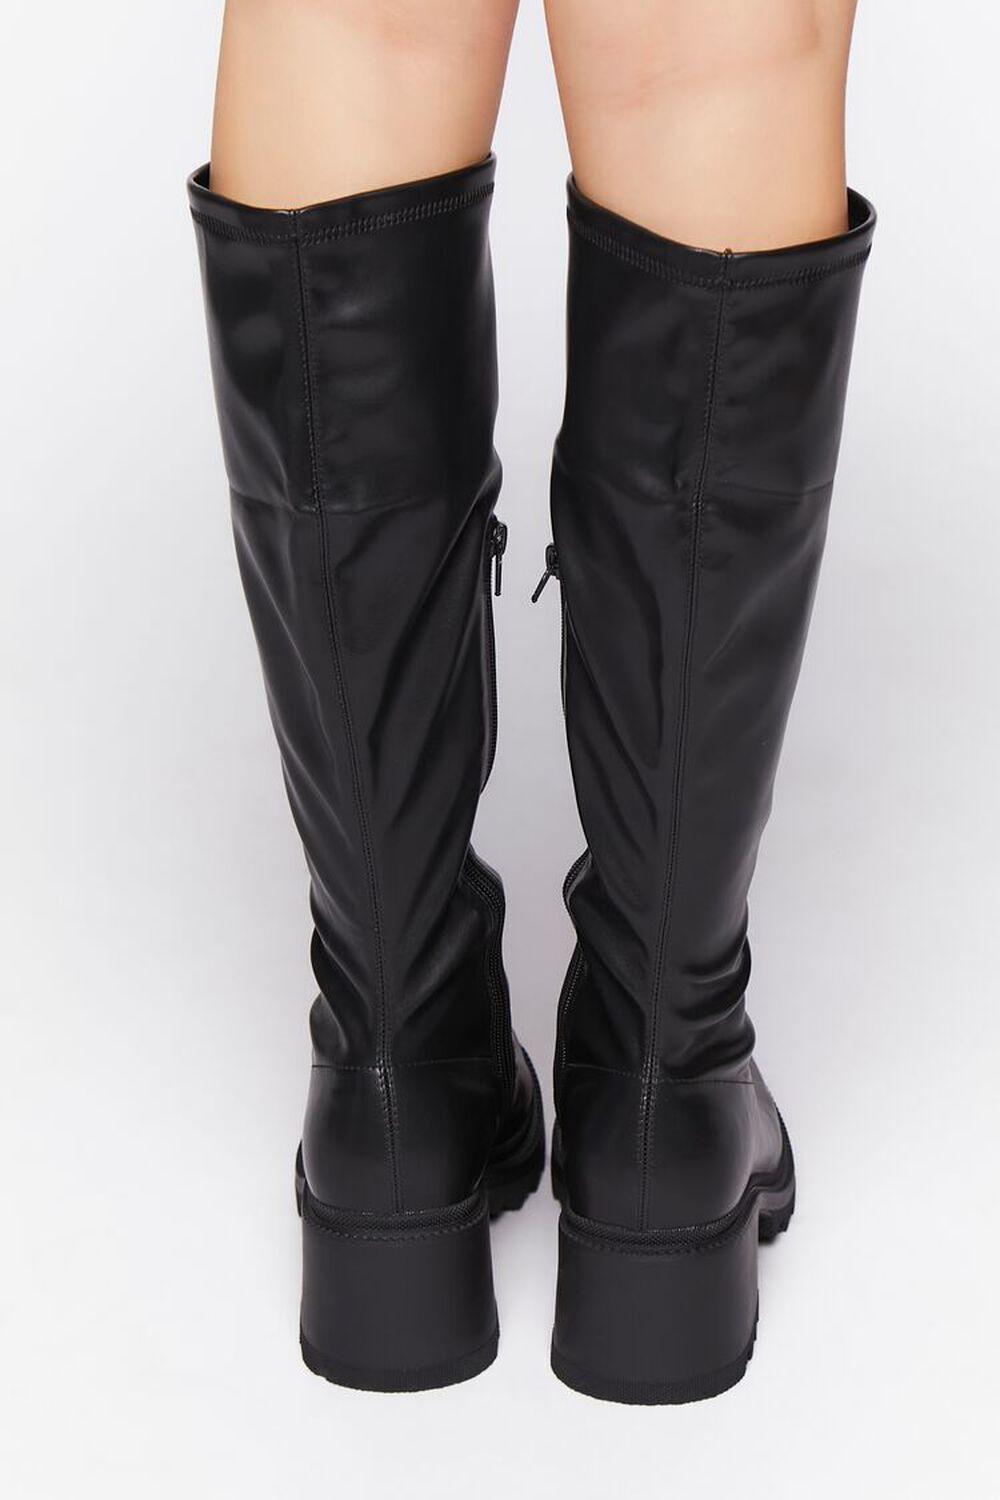 BLACK Faux Leather Knee-High Lug Boots, image 3